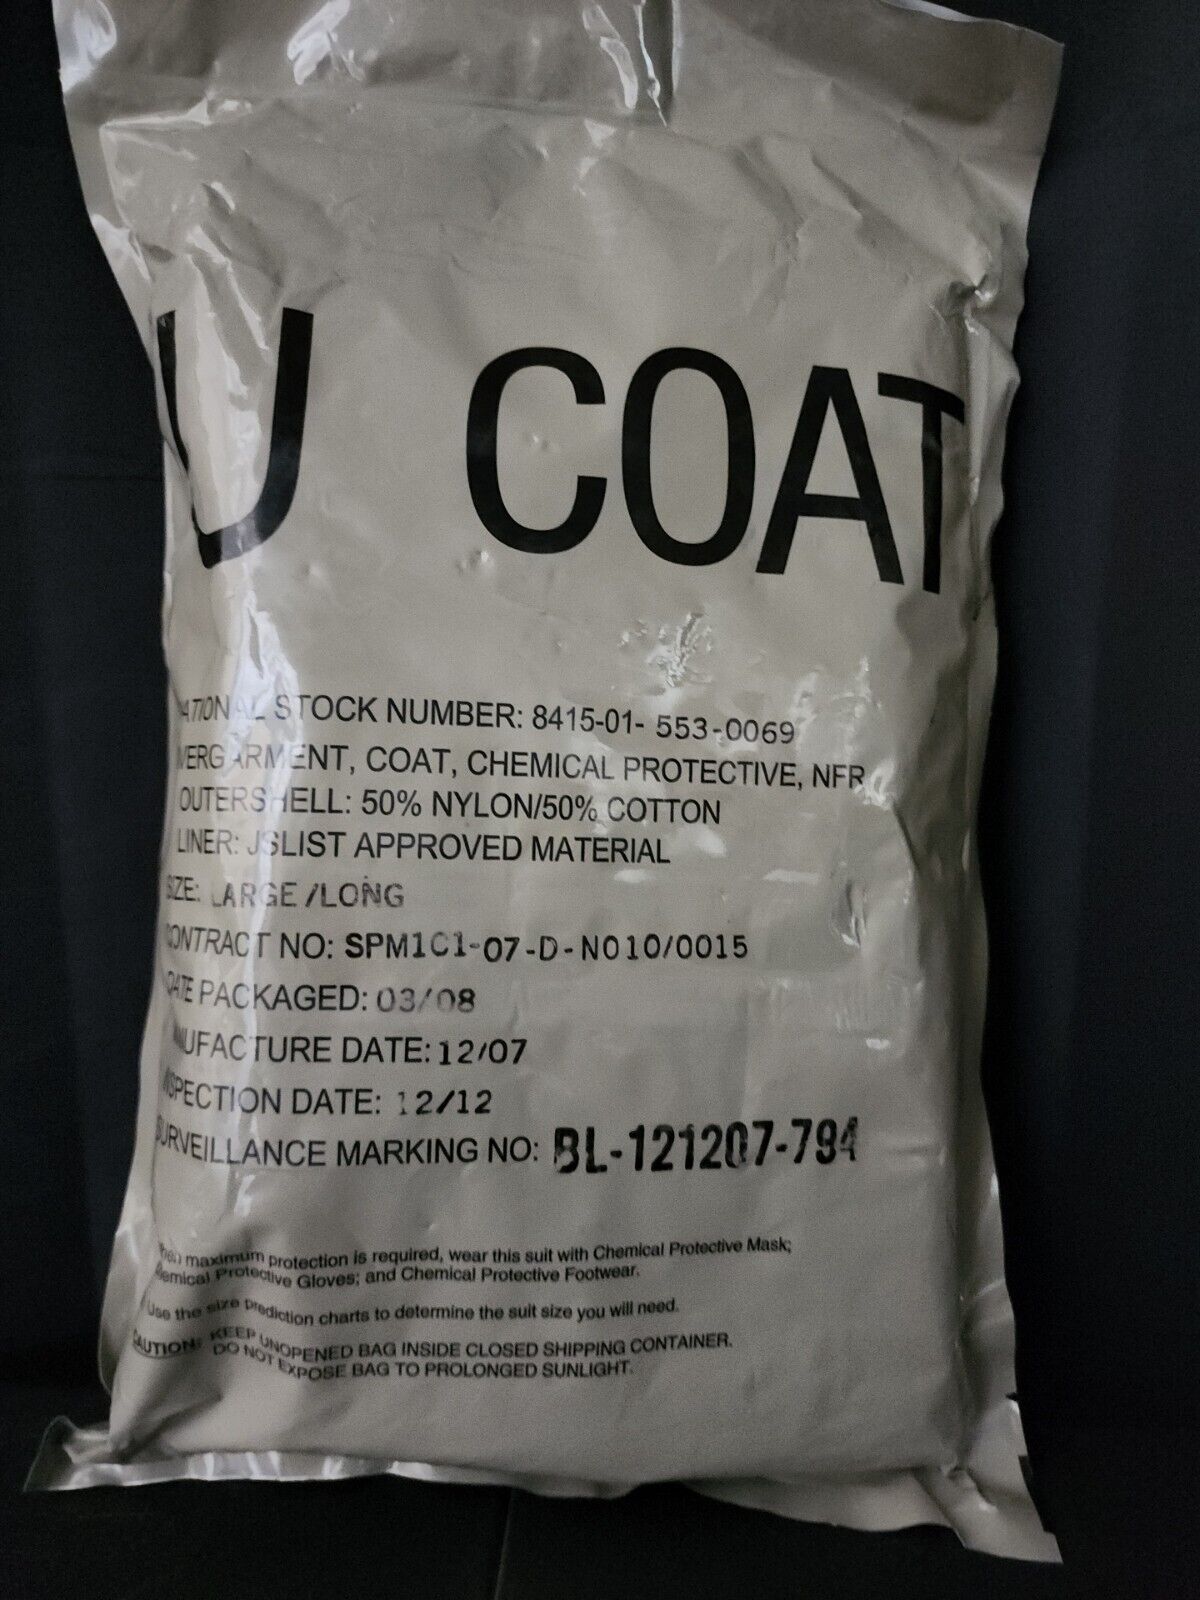 U COAT Overgarment Coat Chemical Protection NFR Large Long